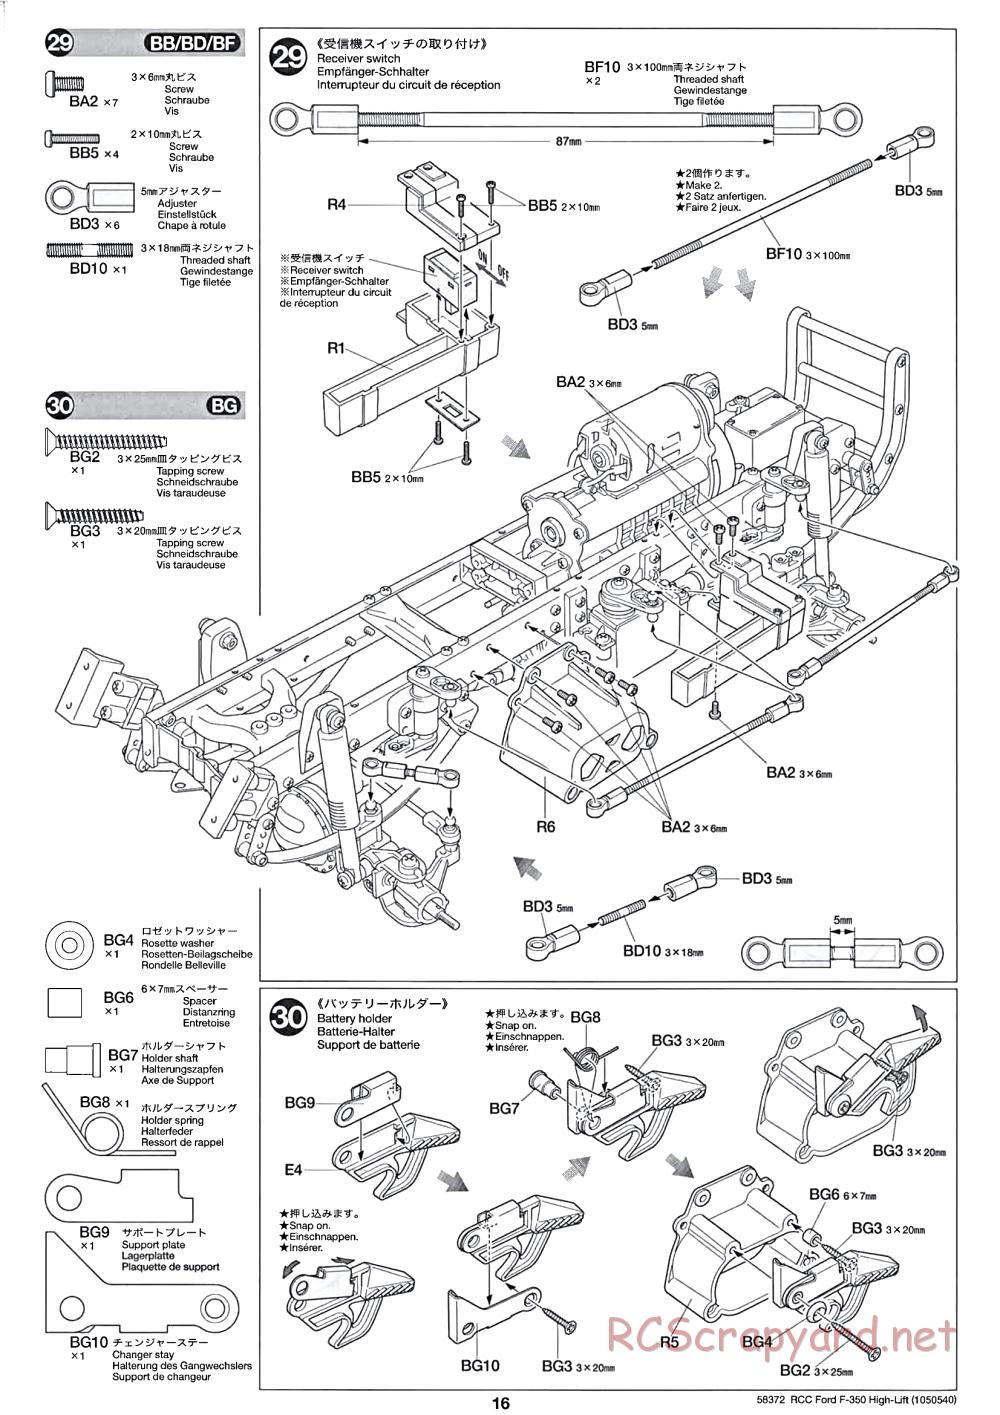 Tamiya - Ford F350 High-Lift Chassis - Manual - Page 16